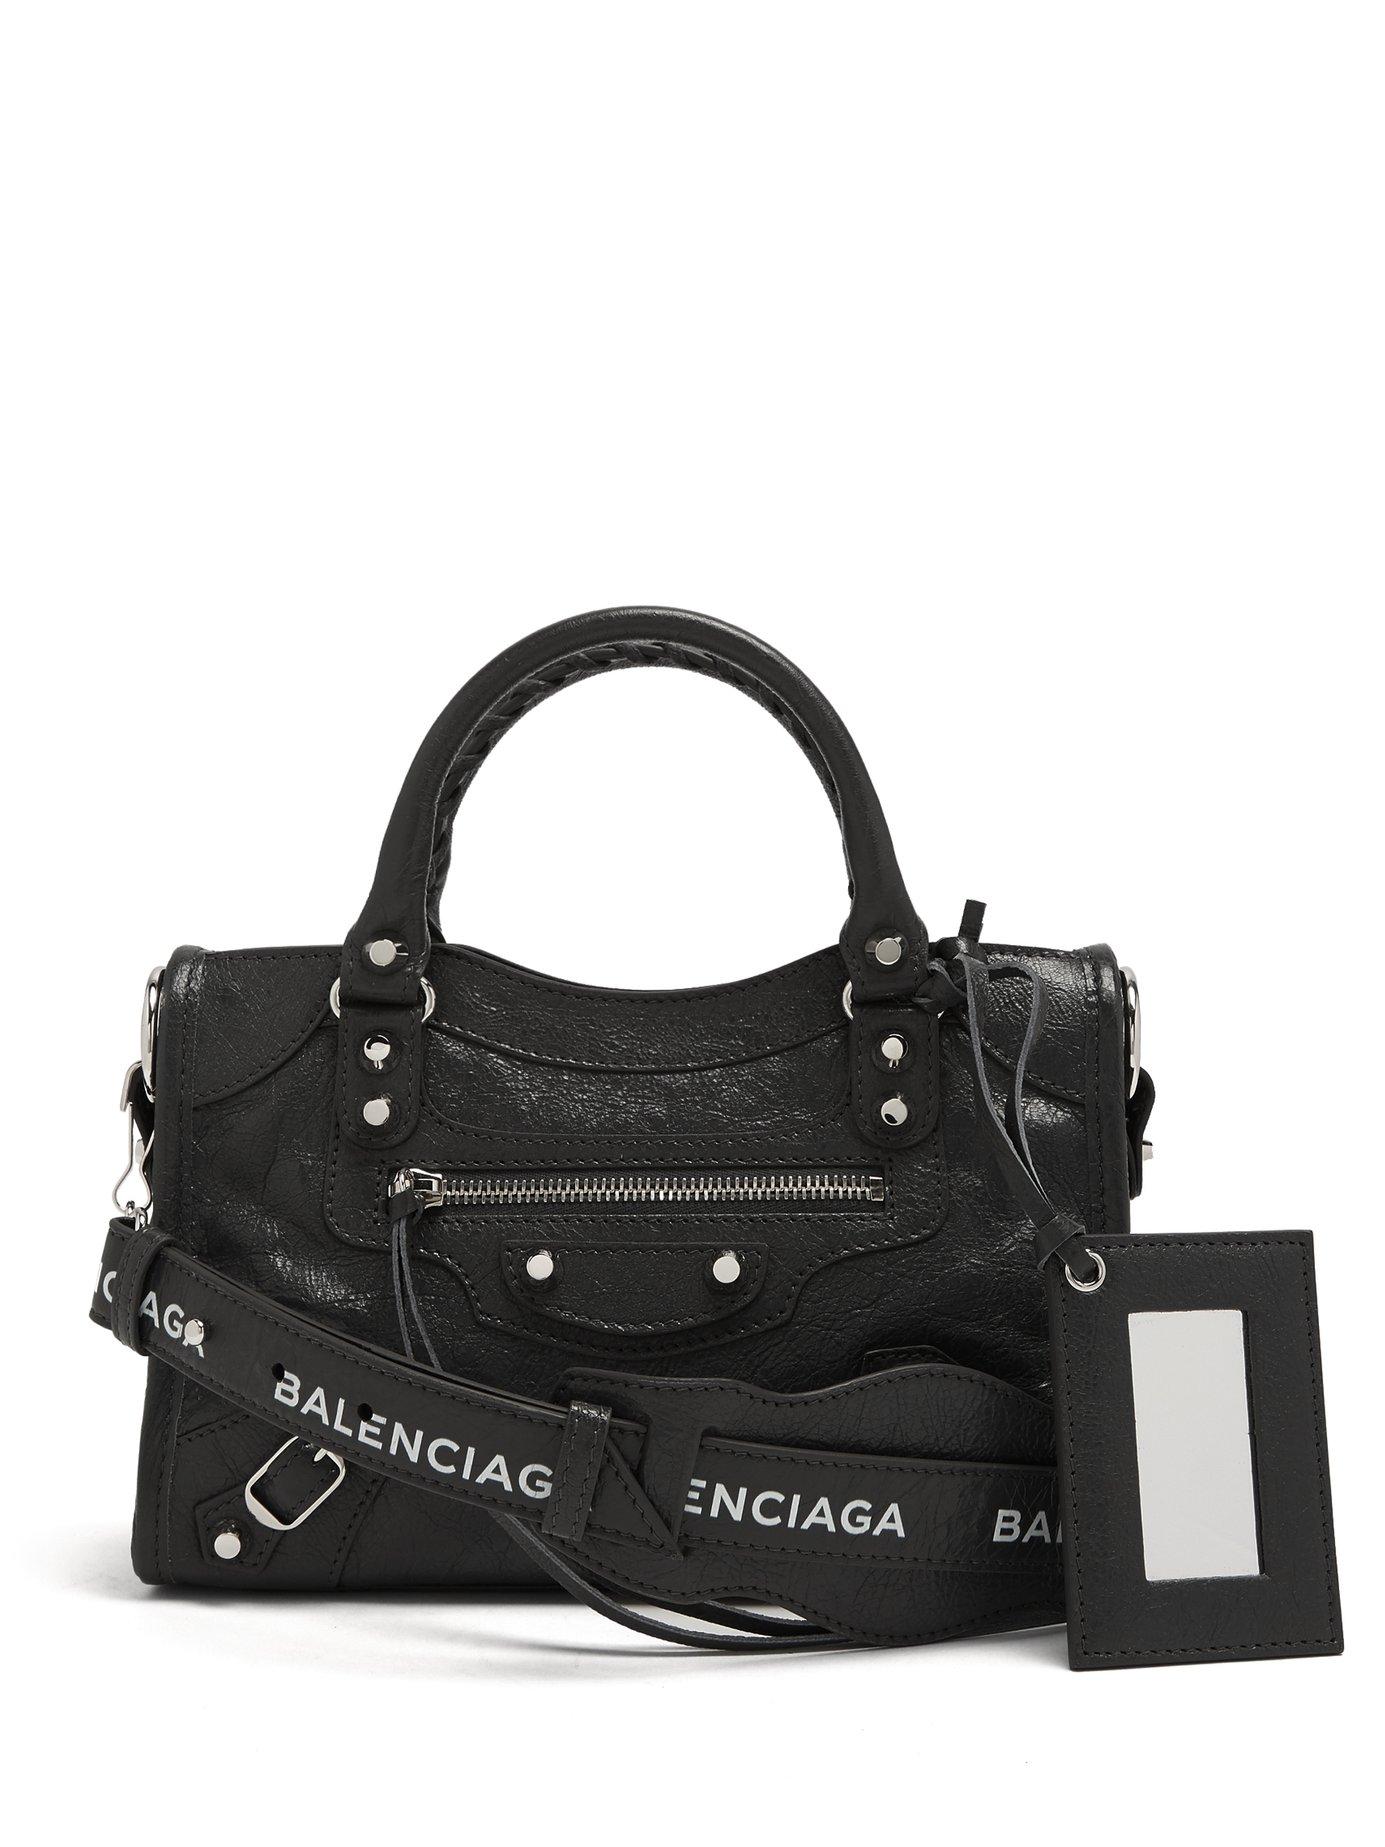 BALENCIAGA Hourglass XS bag in leather  Pink  Balenciaga mini bag  5928331JHVY online on GIGLIOCOM